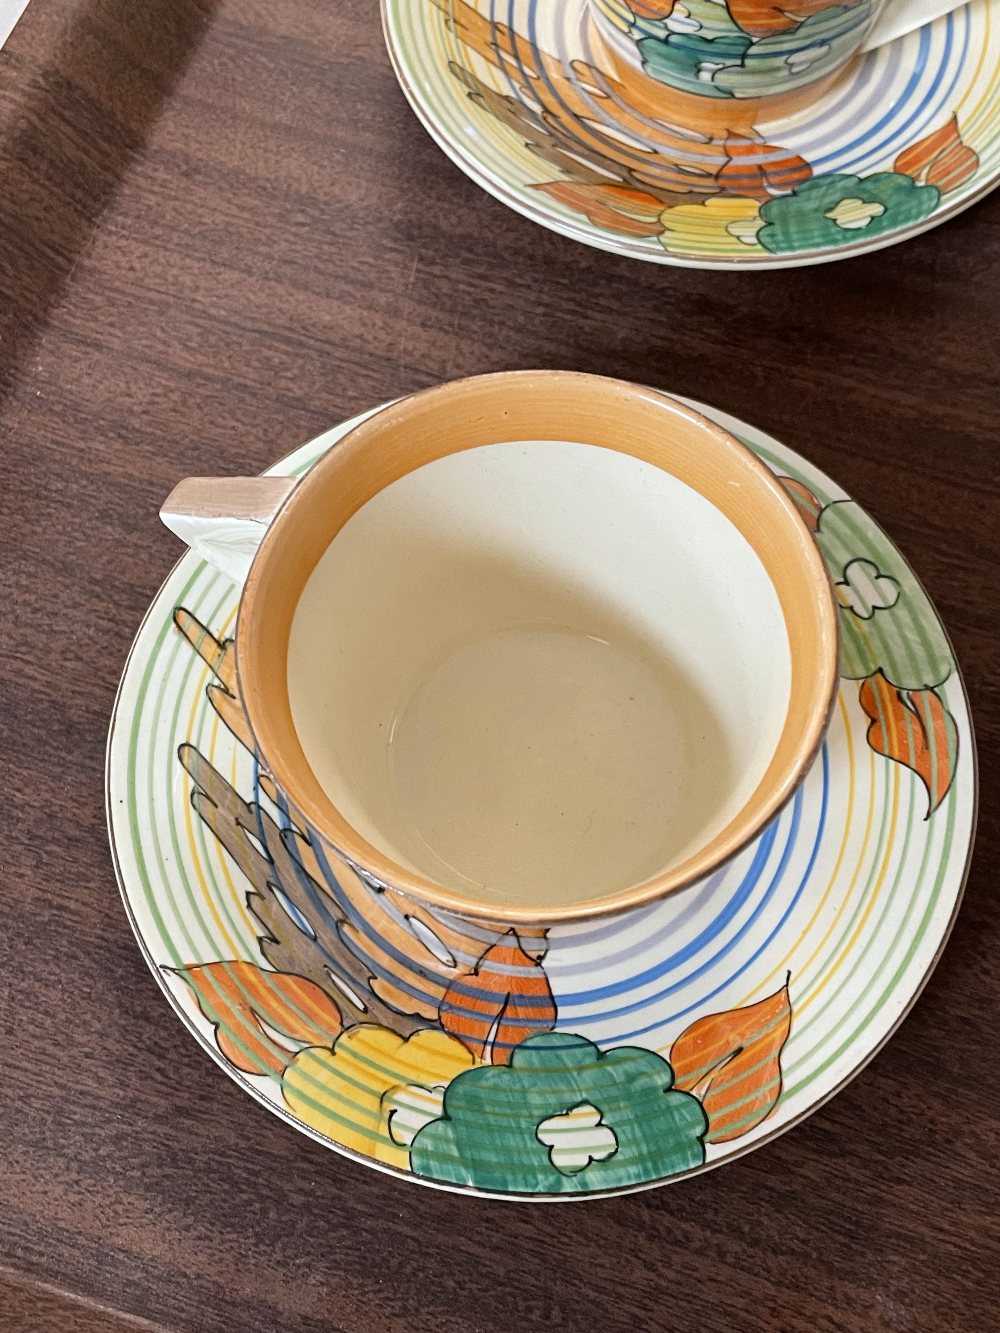 CLARICE CLIFF 'CAPRI' BON JOUR COFFEE SET, c.1935, comprising coffee pot and cover, jug, sugar bowl, - Image 4 of 24